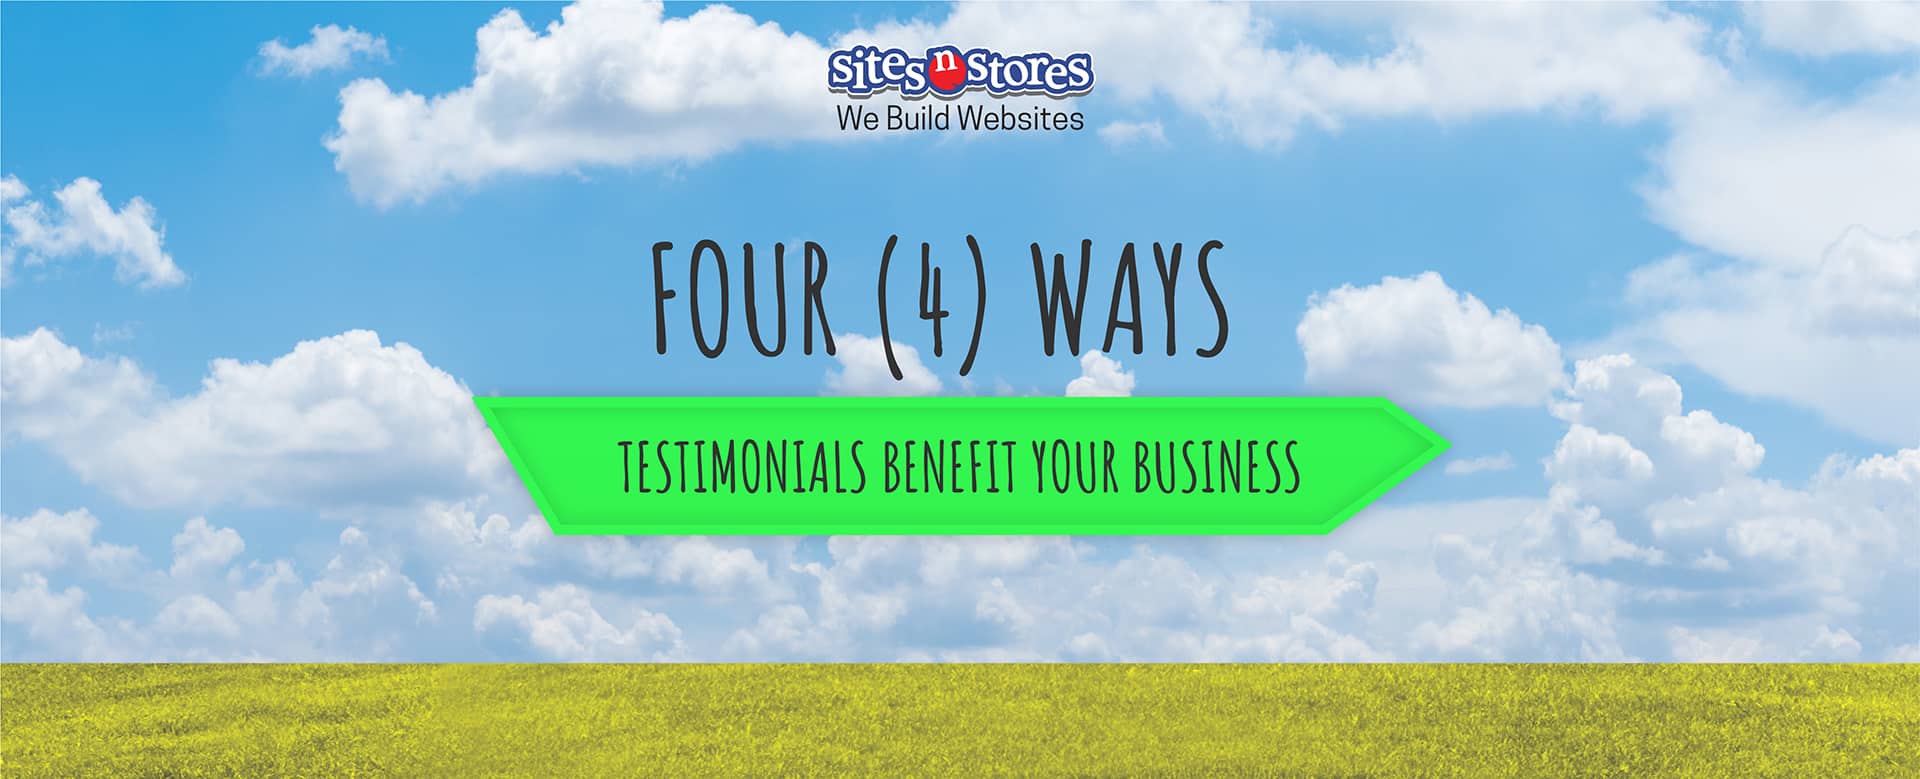 4 Ways Testimonials Benefit Your Business